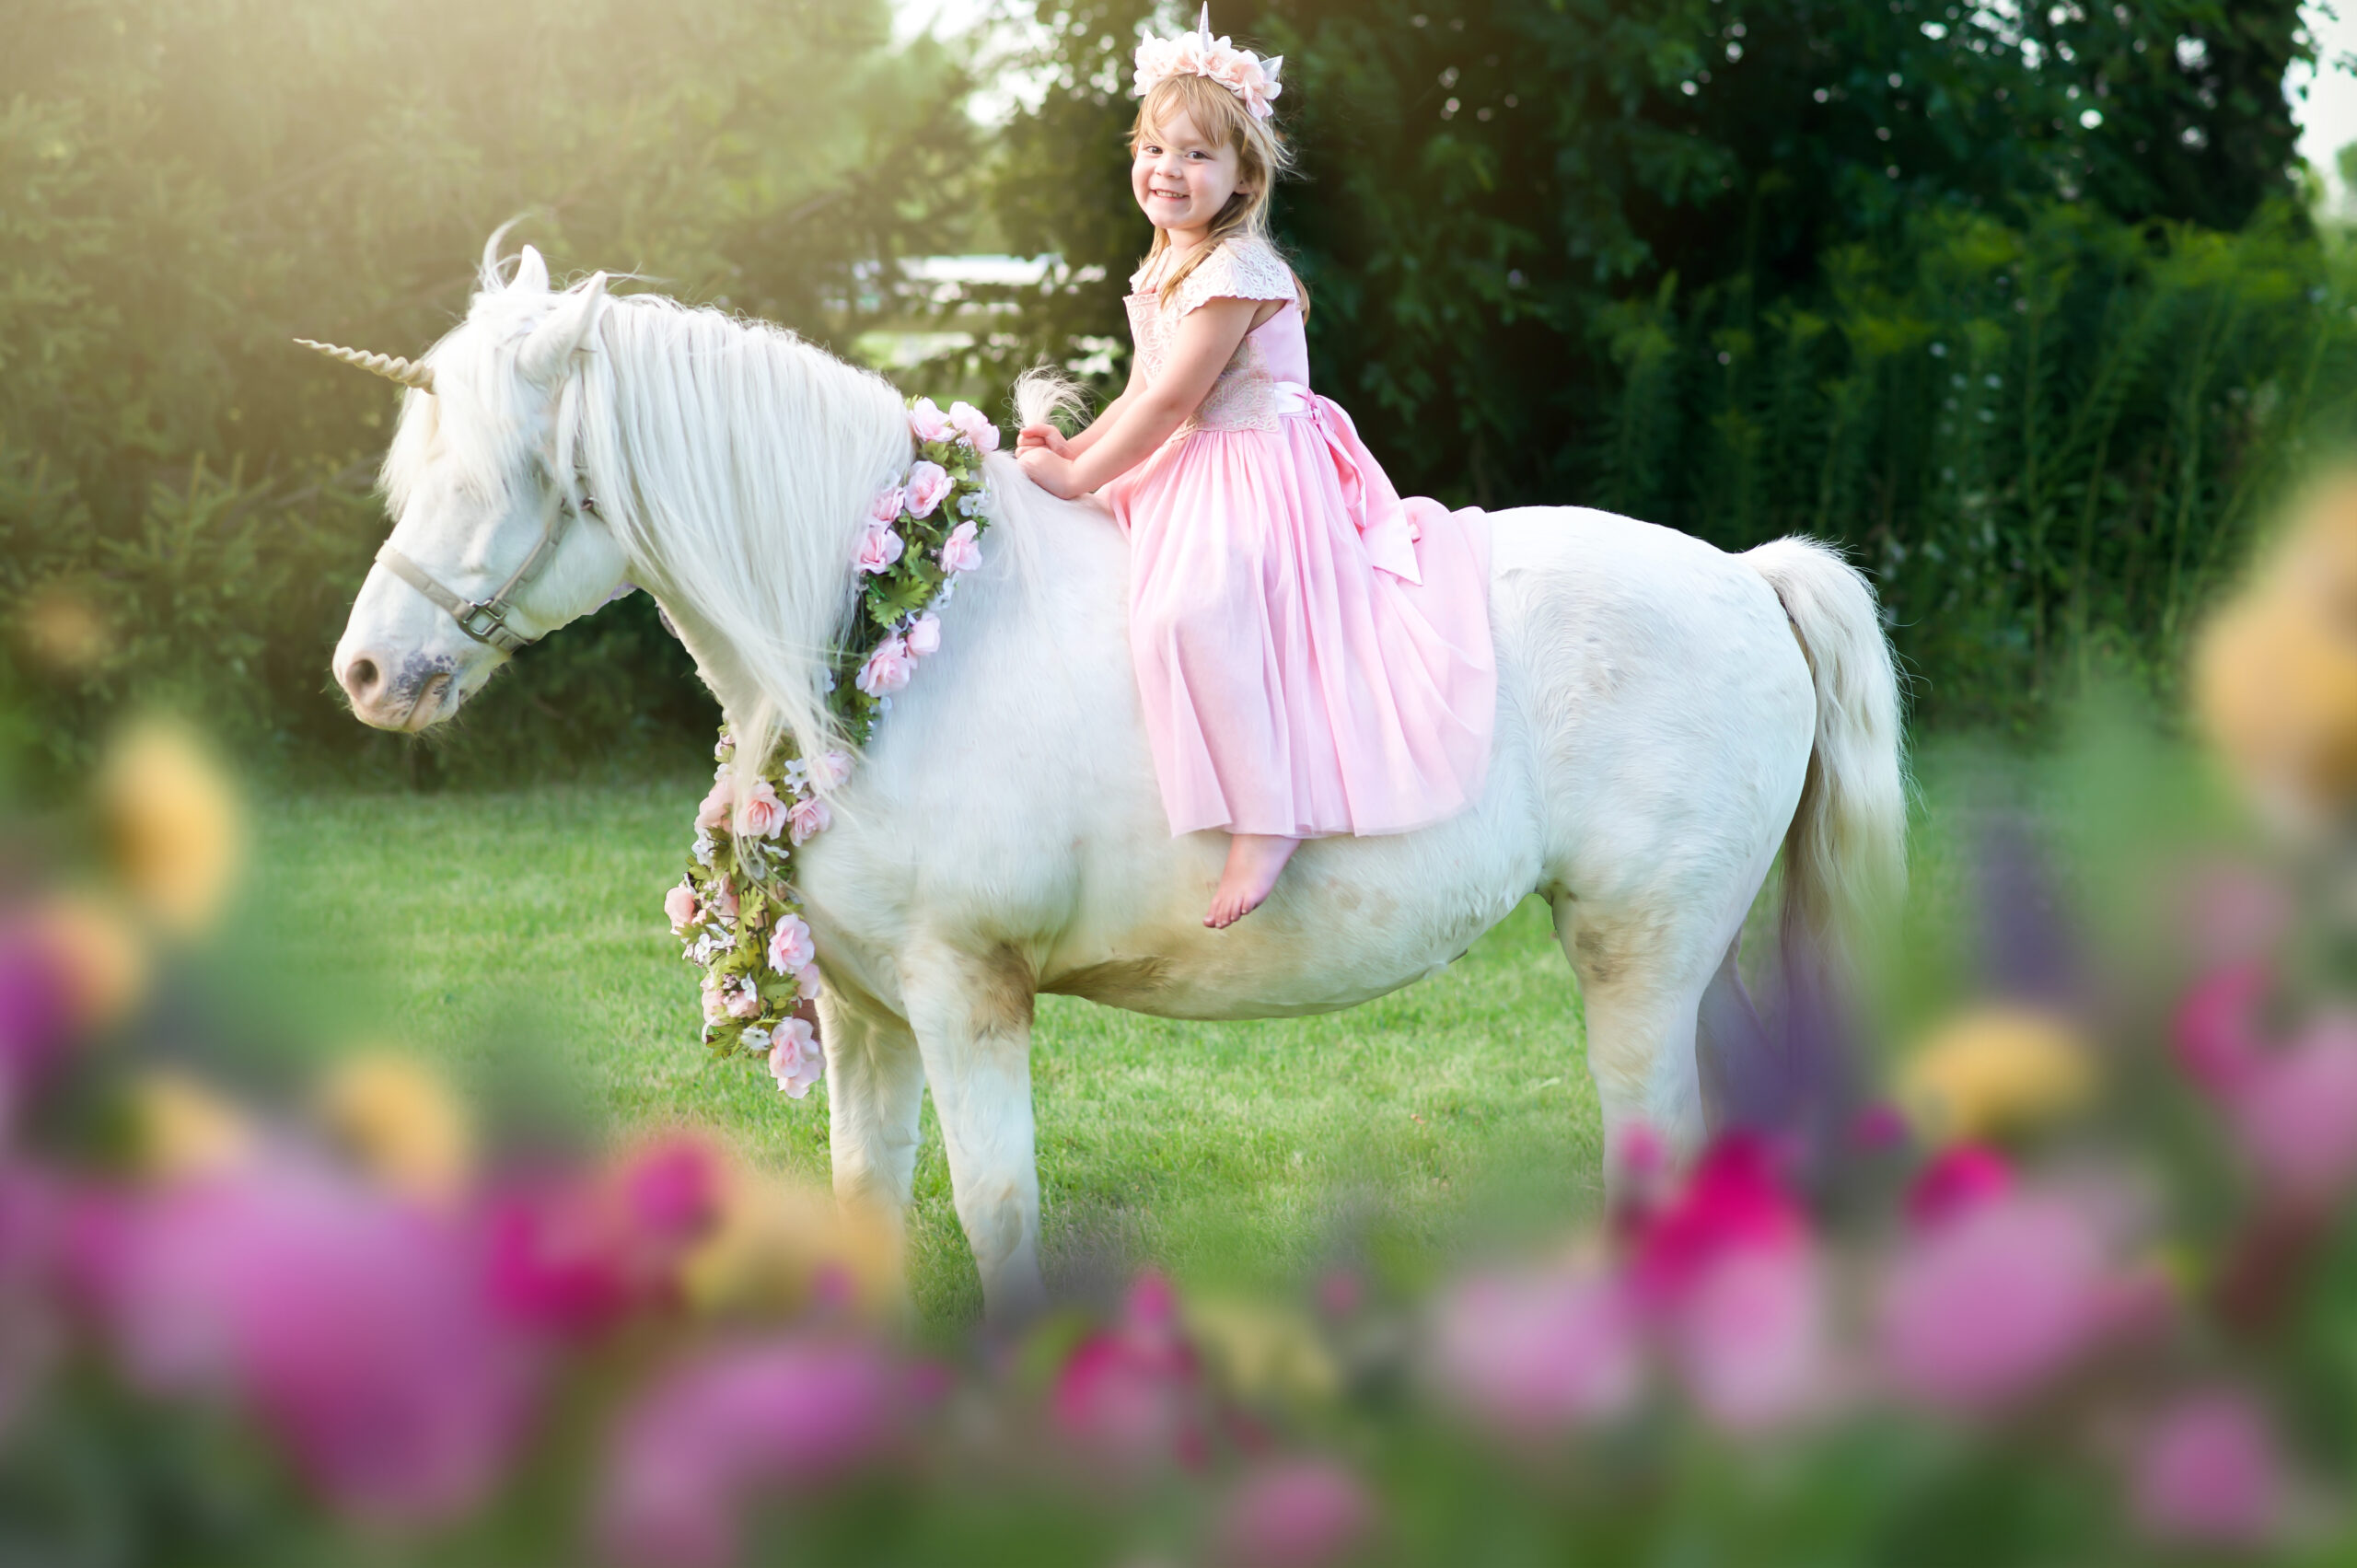 A little girl riding a unicorn